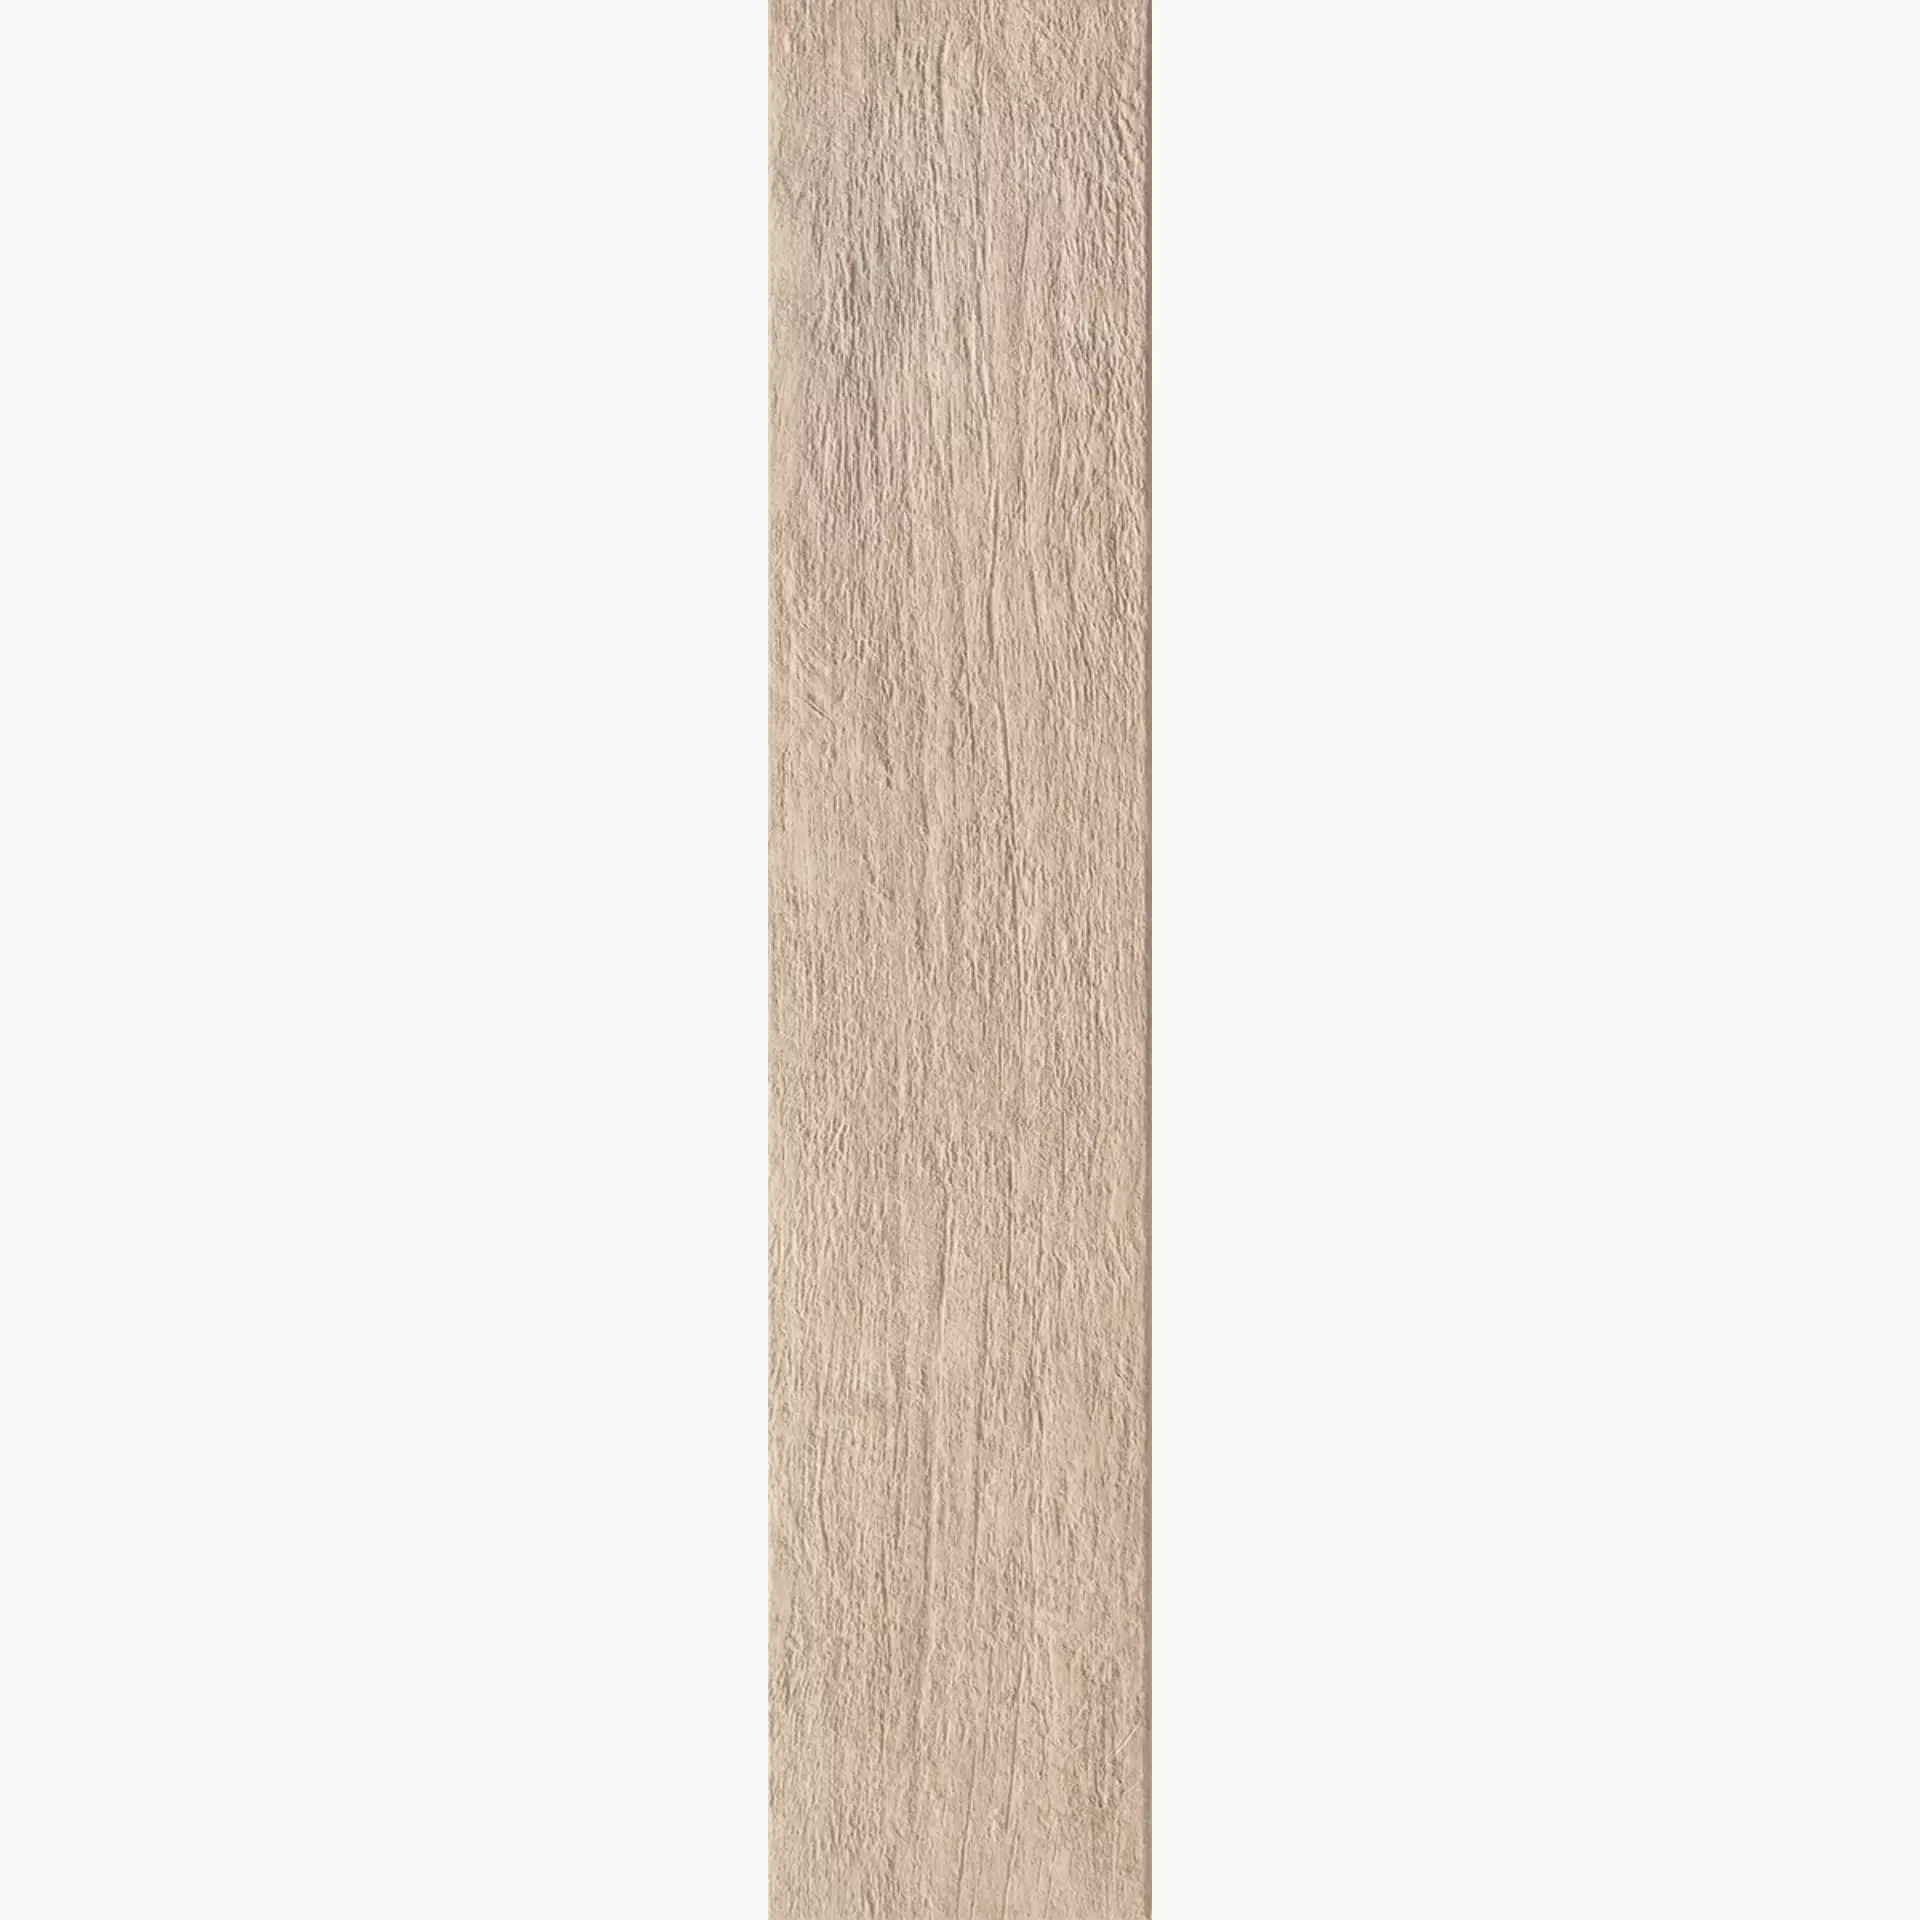 Rondine Greenwood Beige Strong J86706 24x120cm 8,5mm